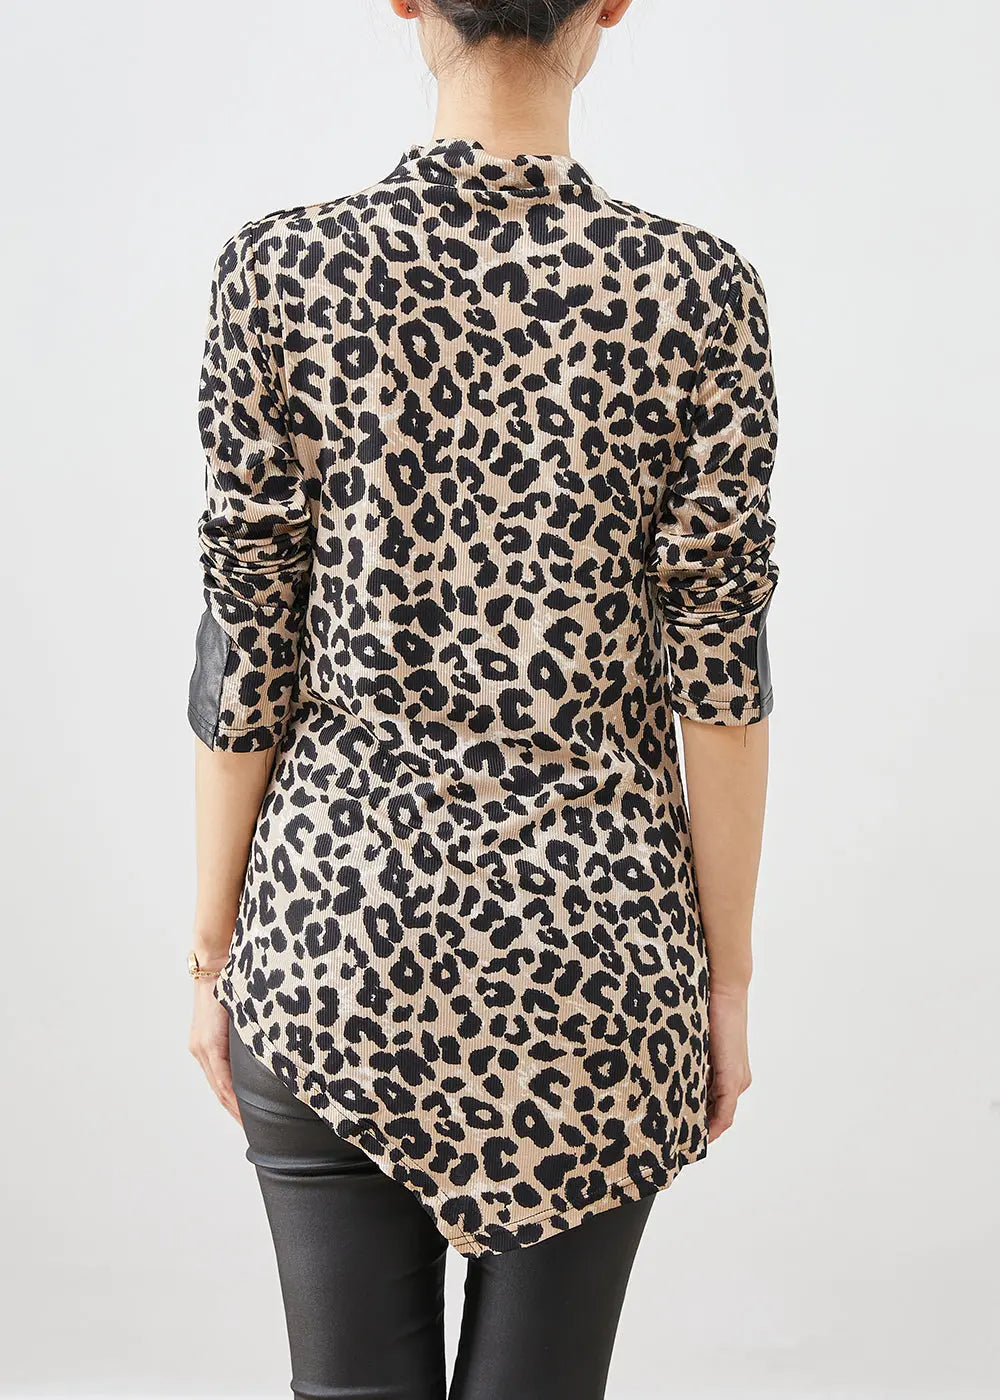 Silm Fit Asymmetrical Leopard Print Cotton Shirt Fall Ada Fashion